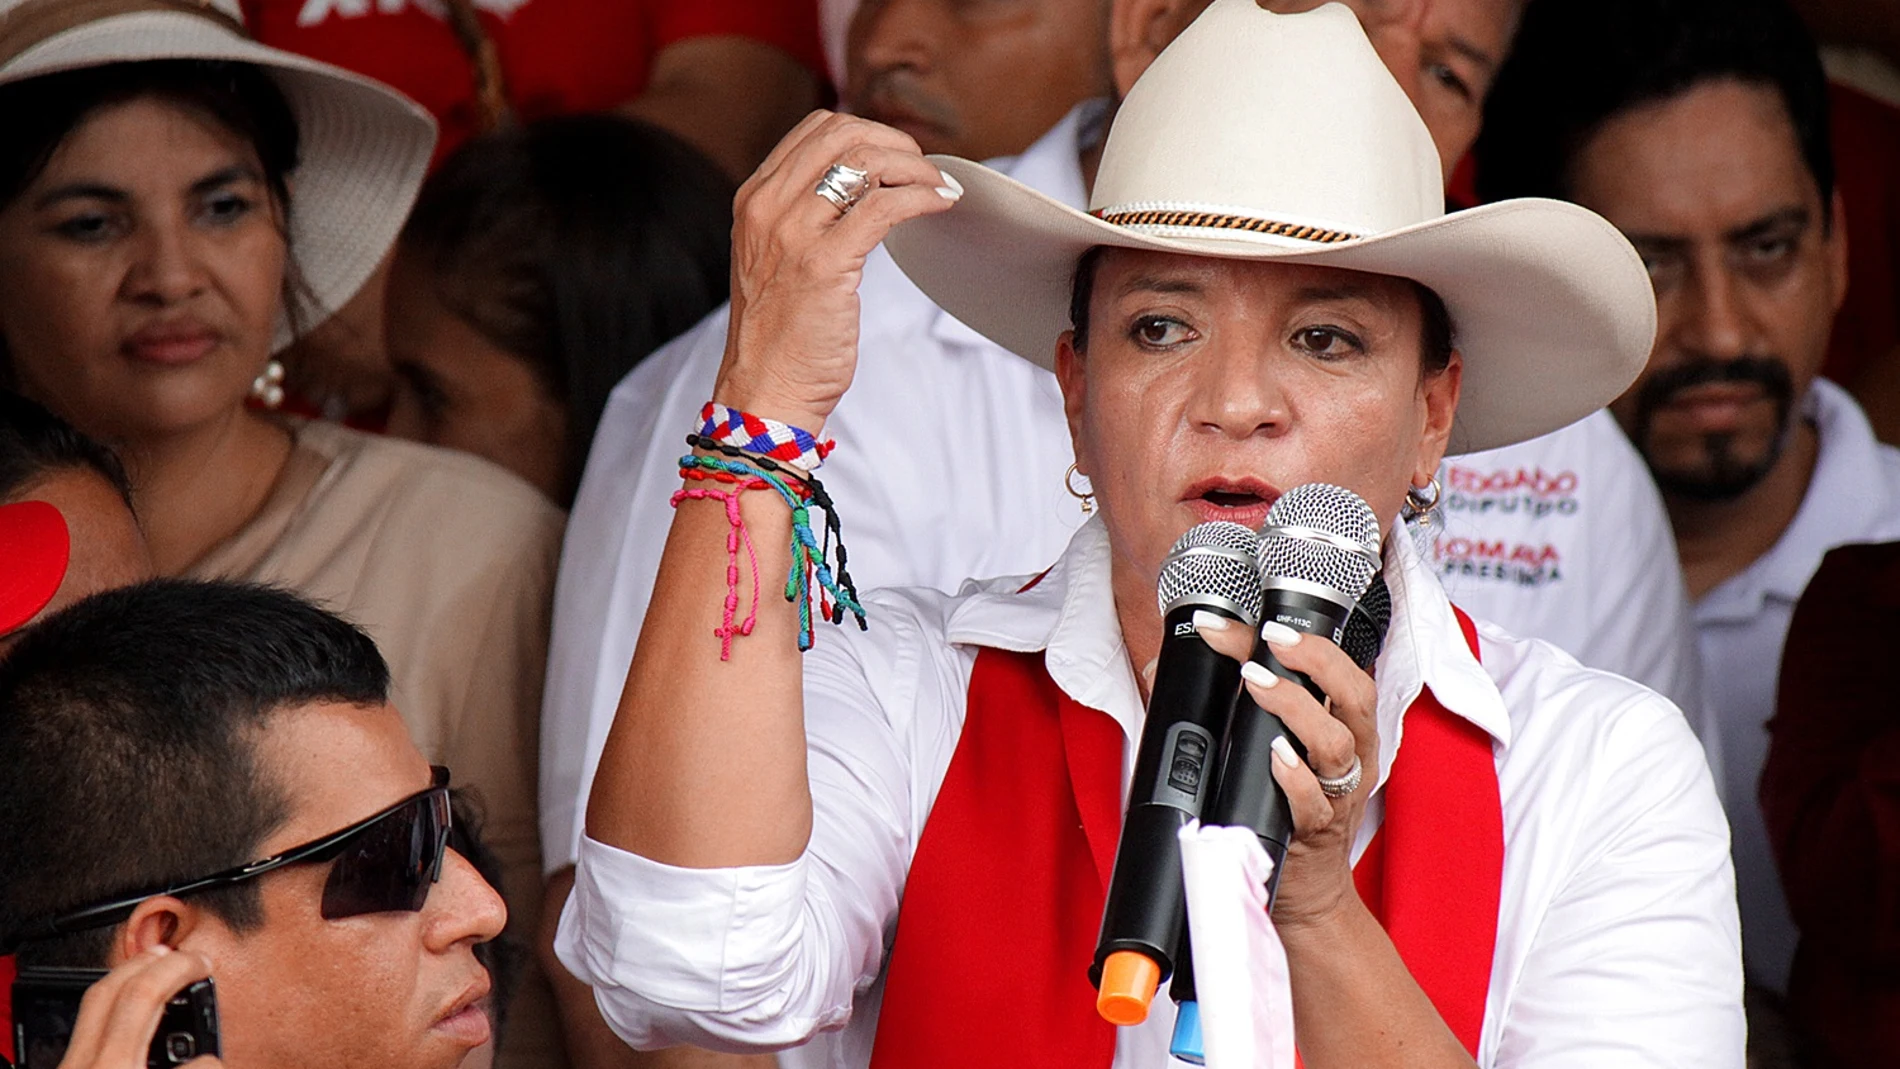 Xiomara Castro, candidata a la Presidencia de Honduras